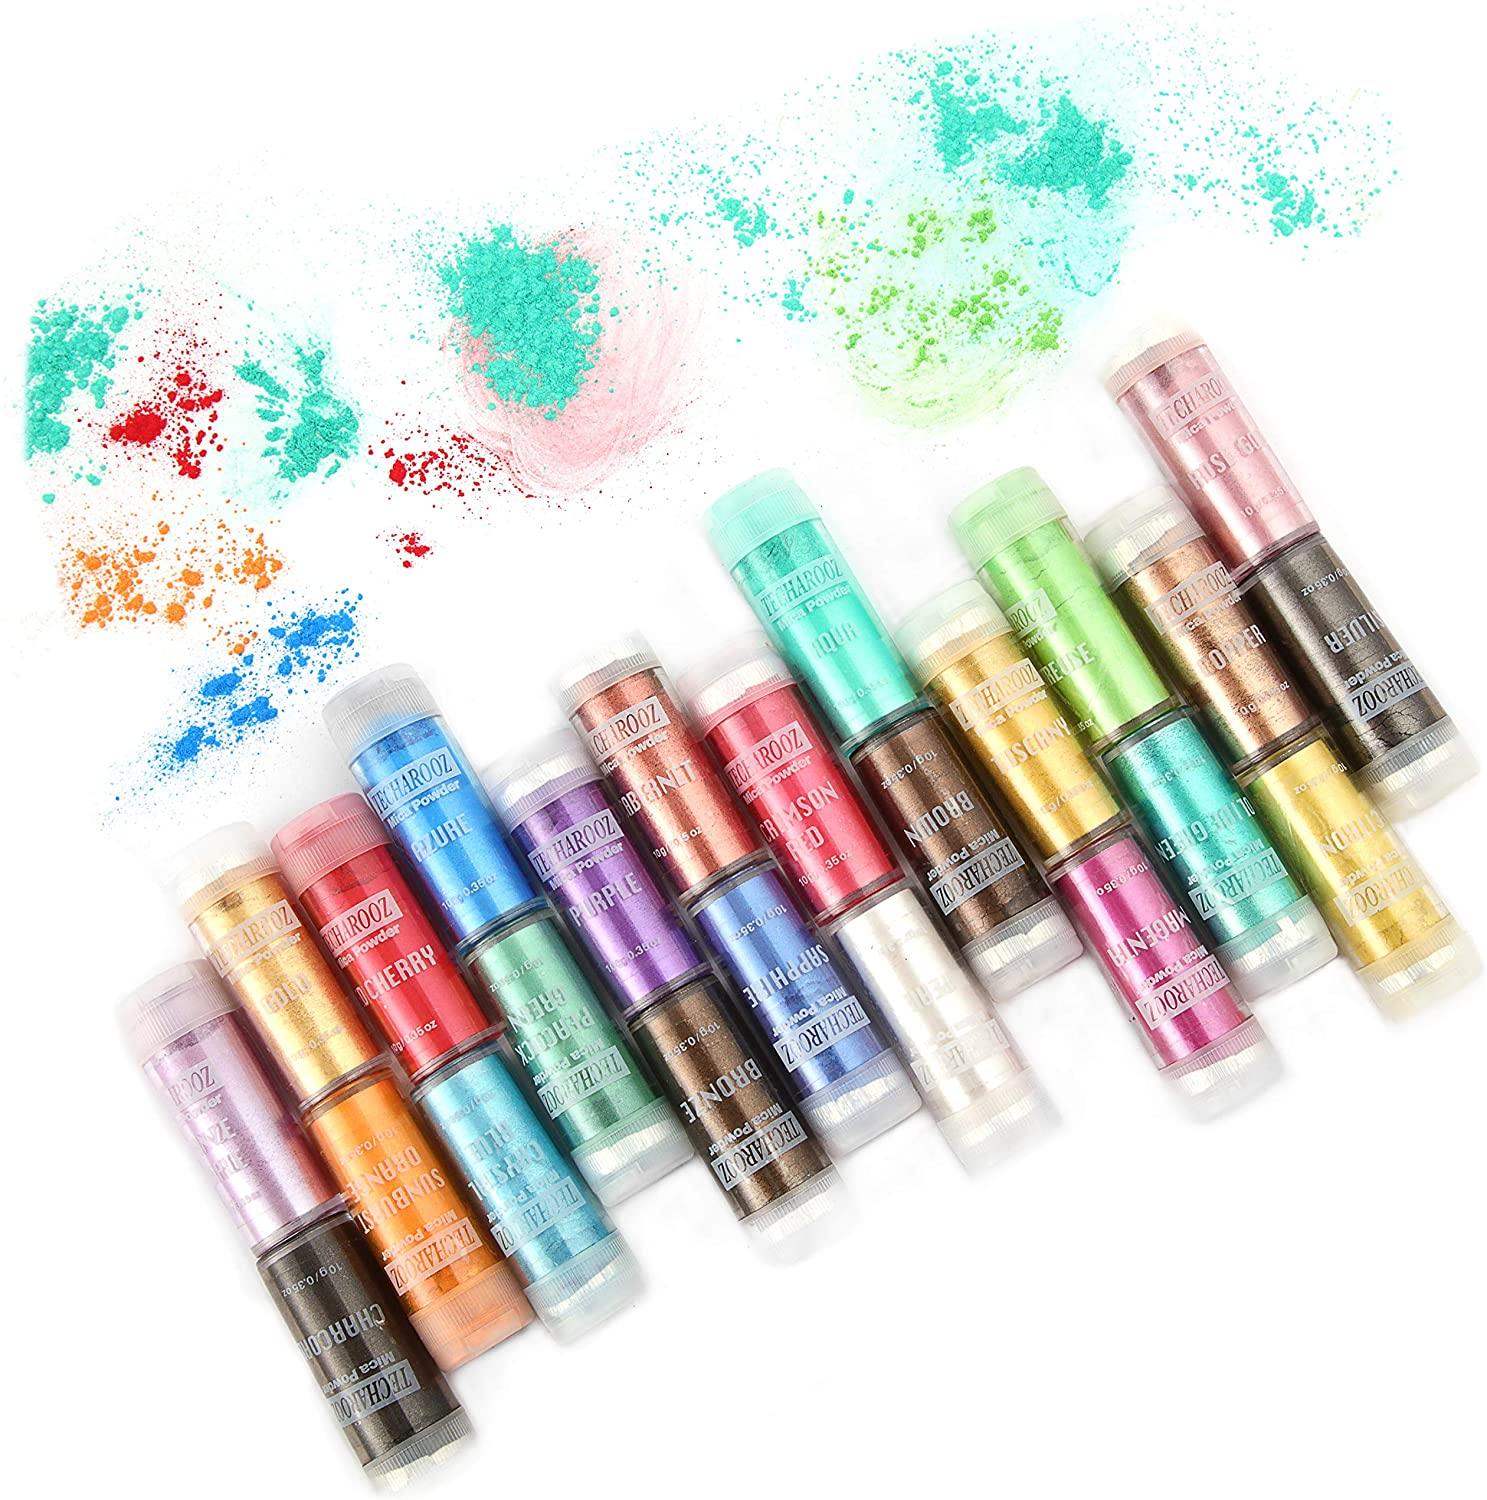 Colorful DIY Lip Gloss Powder Material 1g Lipstick Pigment Powder